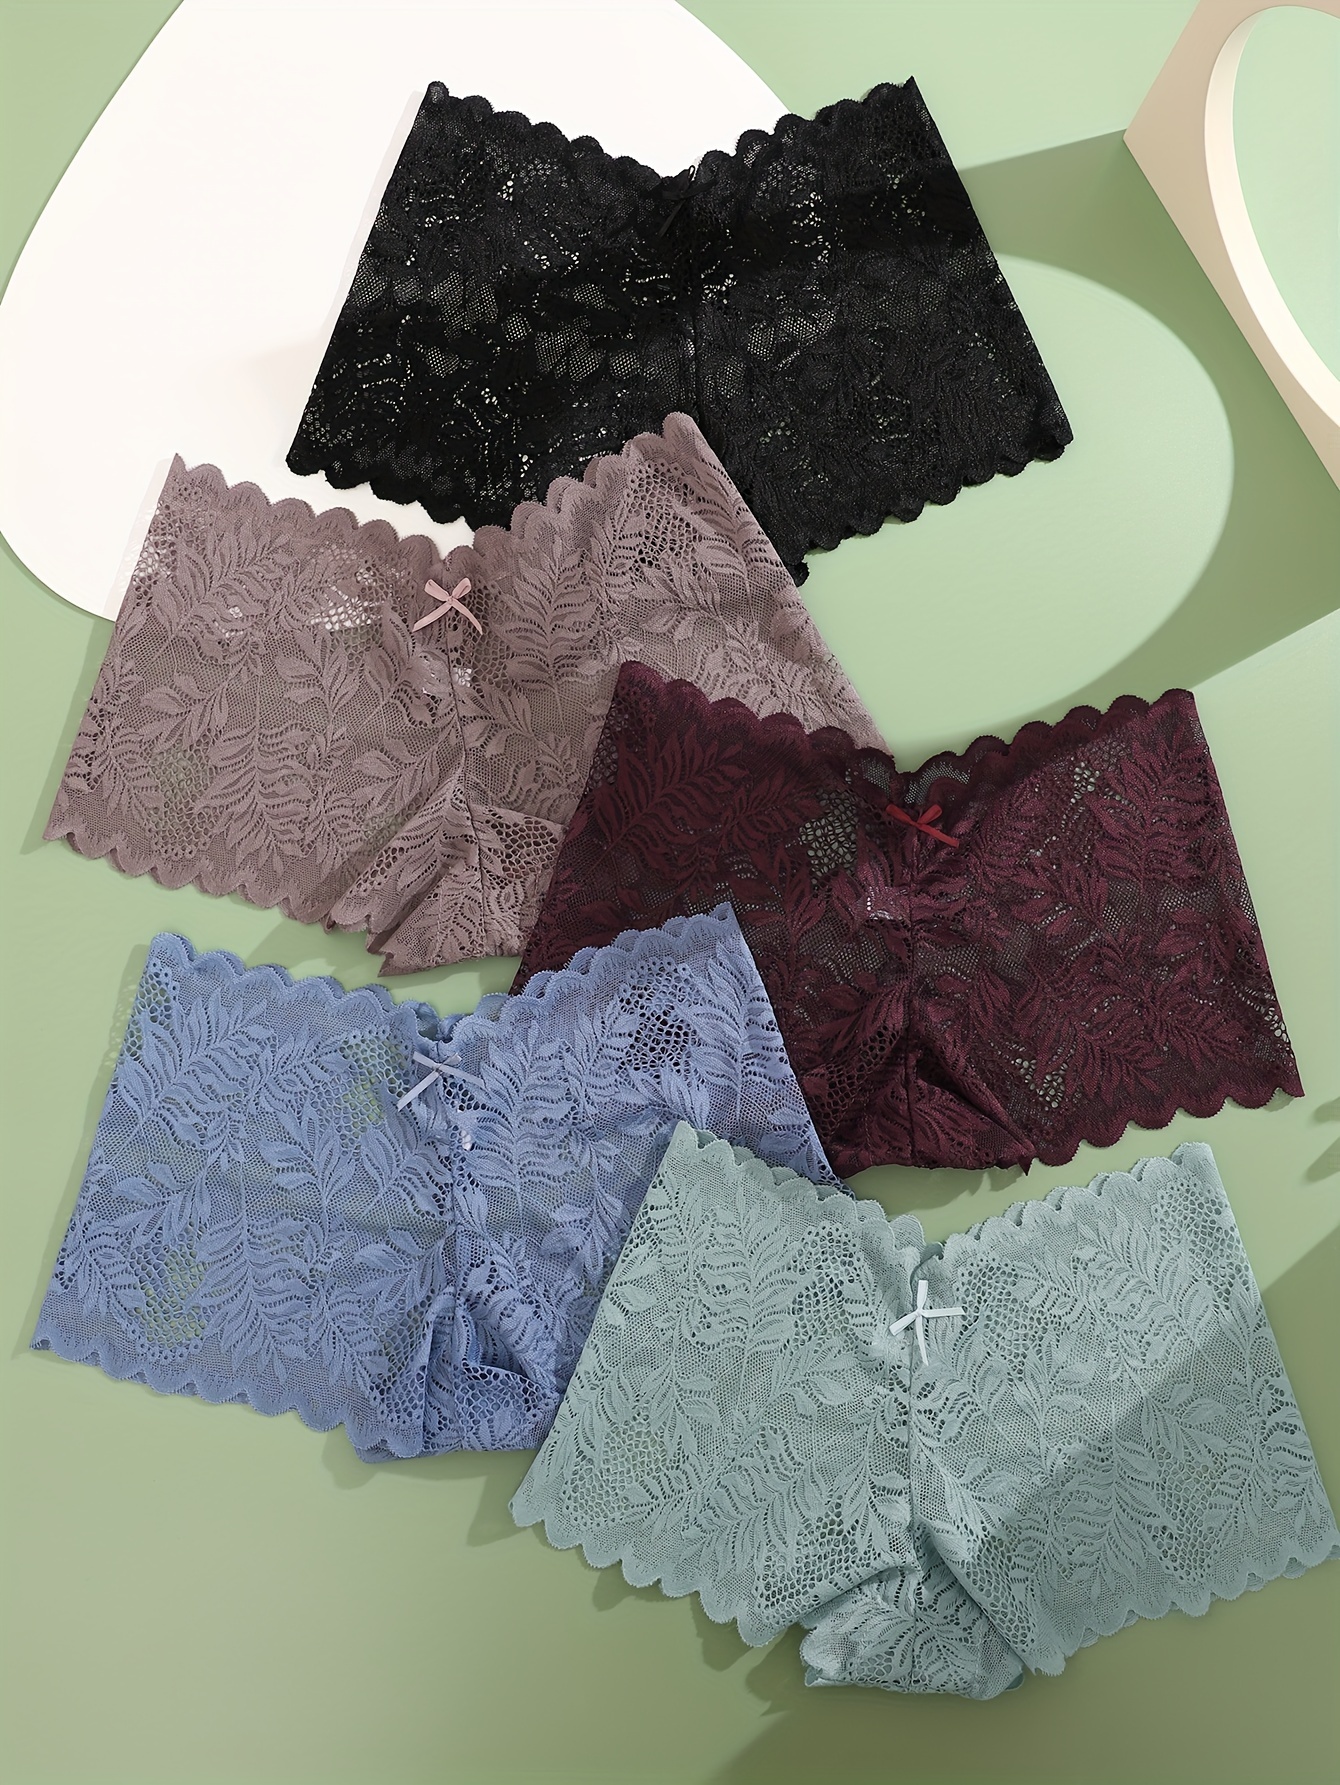 Wholesale Plus Size Floral Lace Shortie Underwear for 120-240 lbs for your  store - Faire